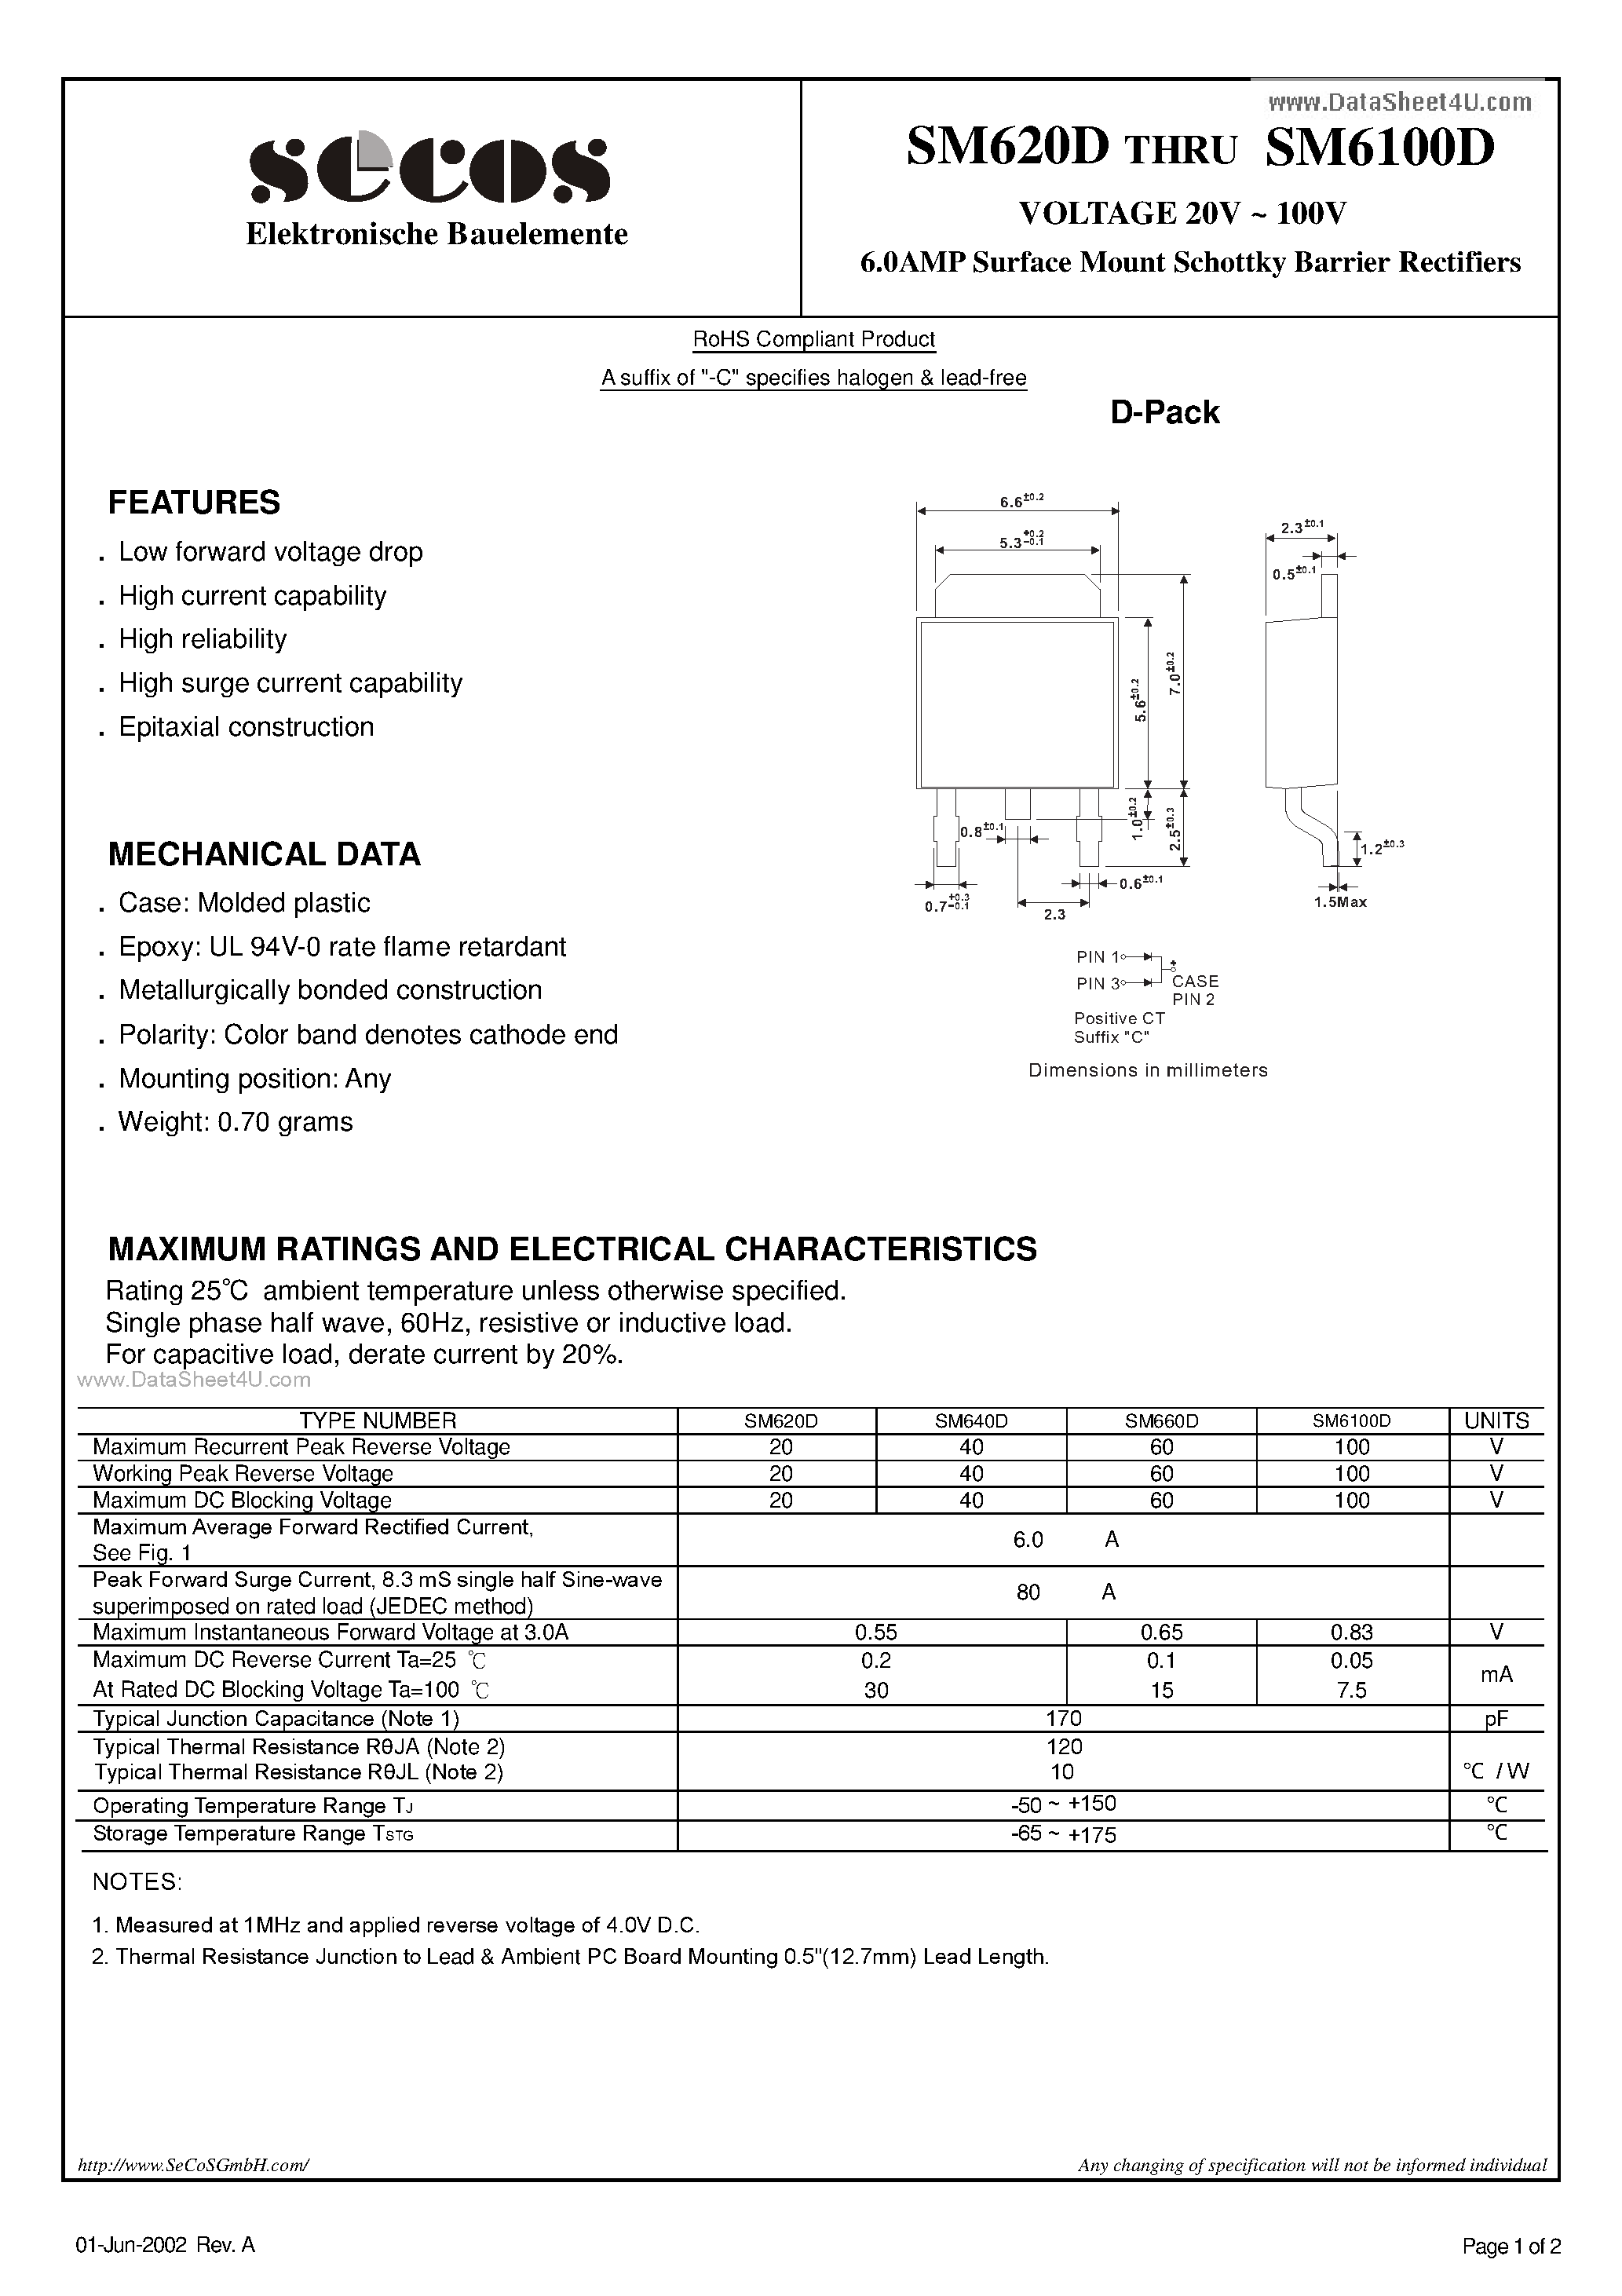 Даташит SM6100D - (SM620D - SM6100D) 6.0AMP Surface Mount Schottky Barrier Rectifiers страница 1